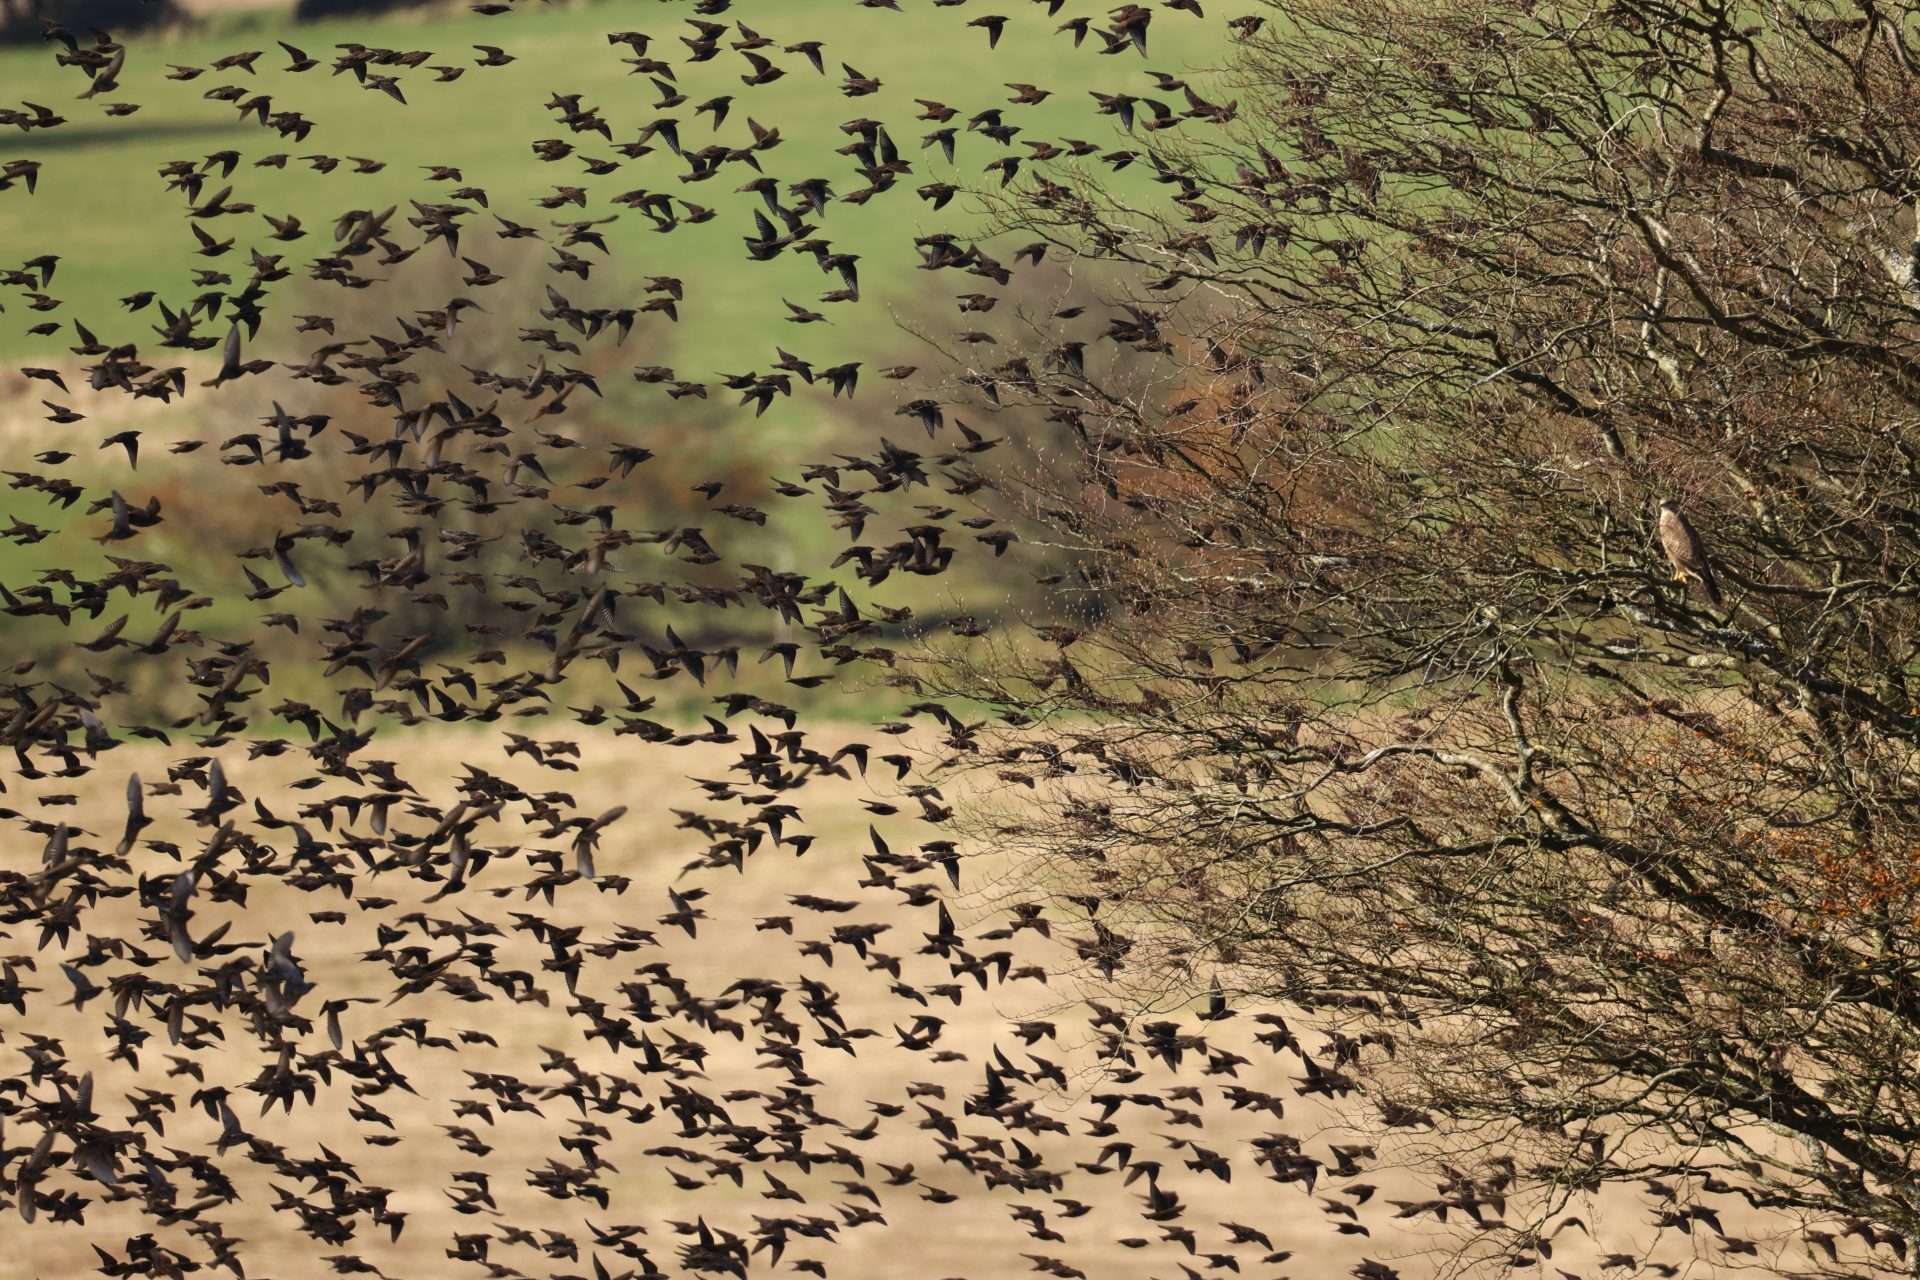 Starling by Steve Hopper at North Devon